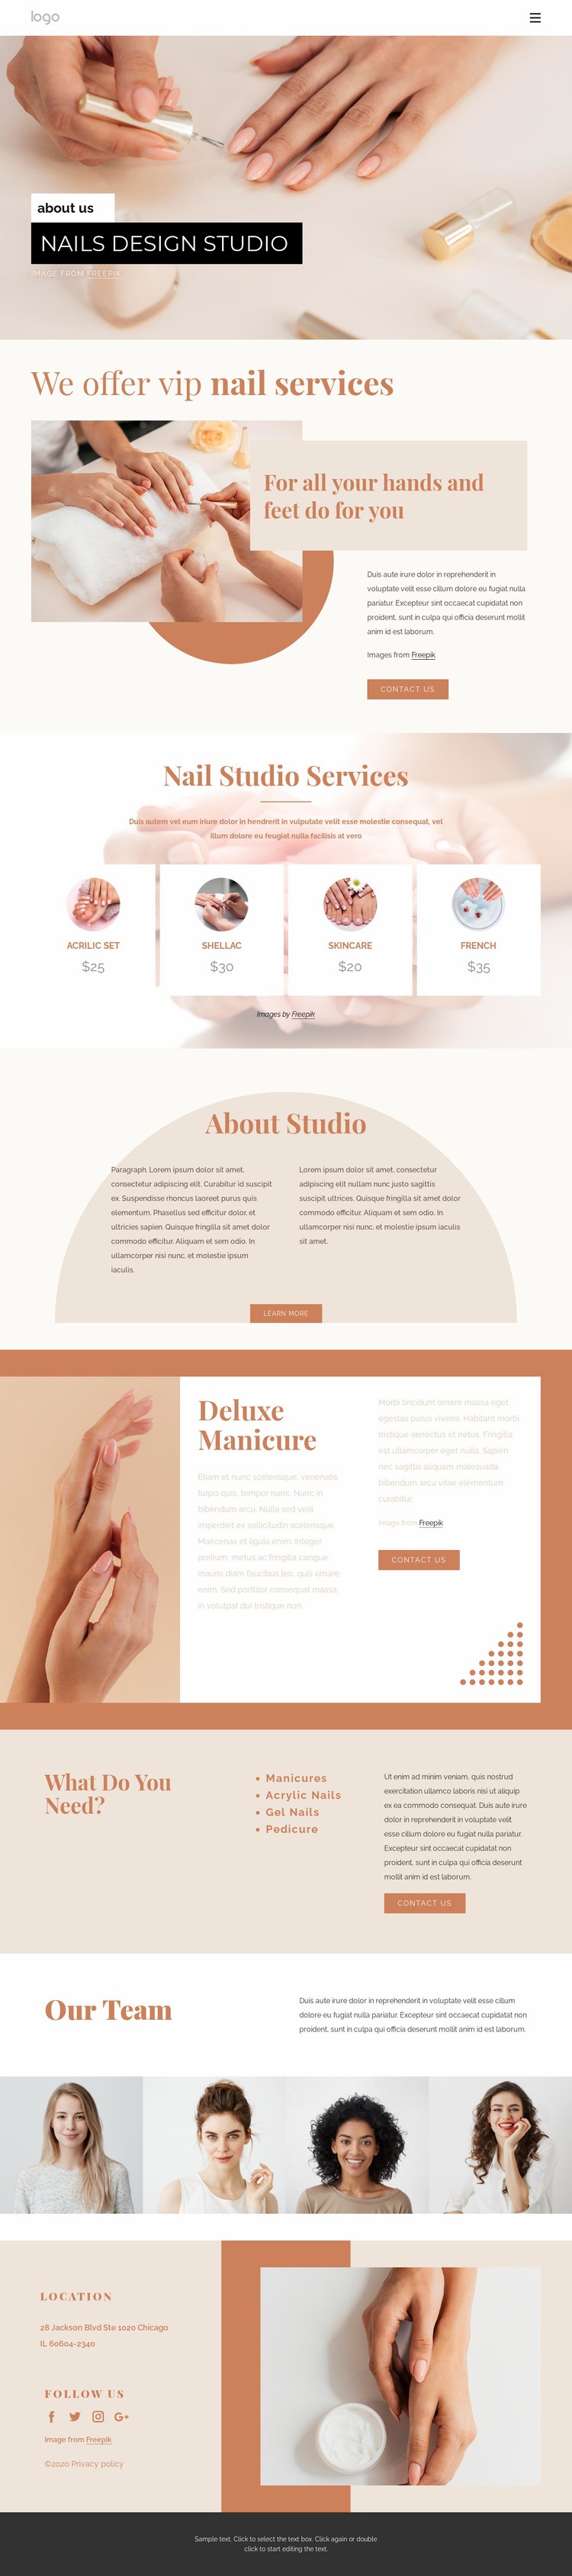 Professional nail art Web Page Design